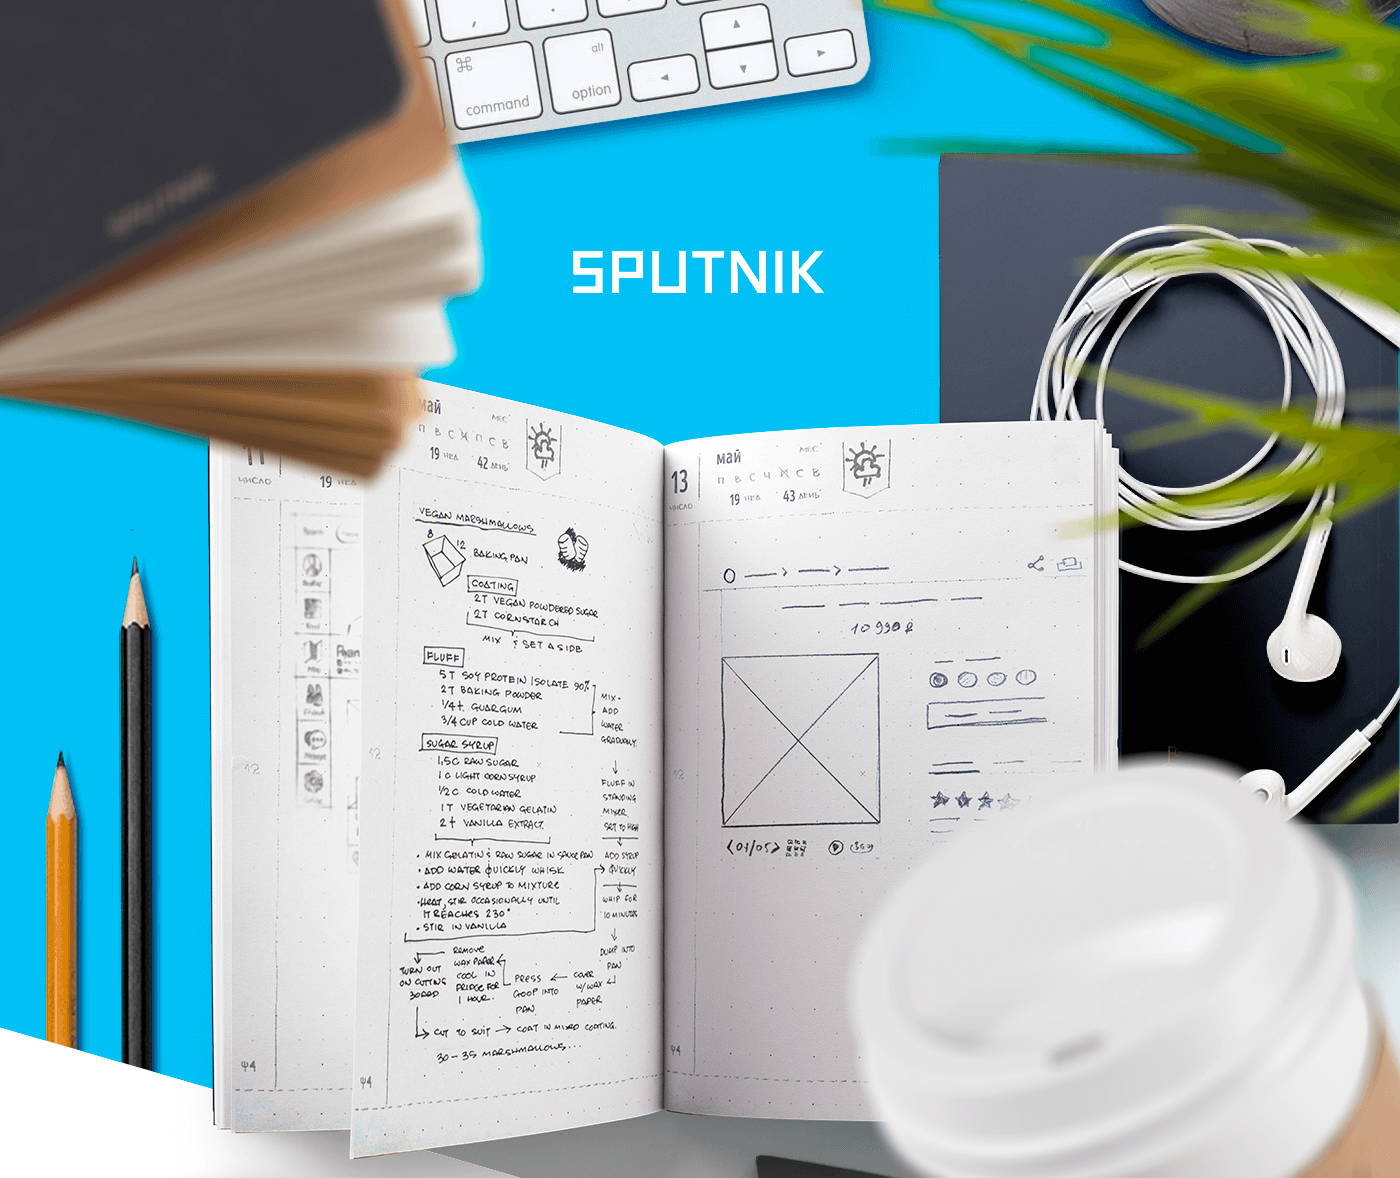 Sputnik gorodkey notebook ingrid dotted sketch noting planner Space  Life Style zen noting